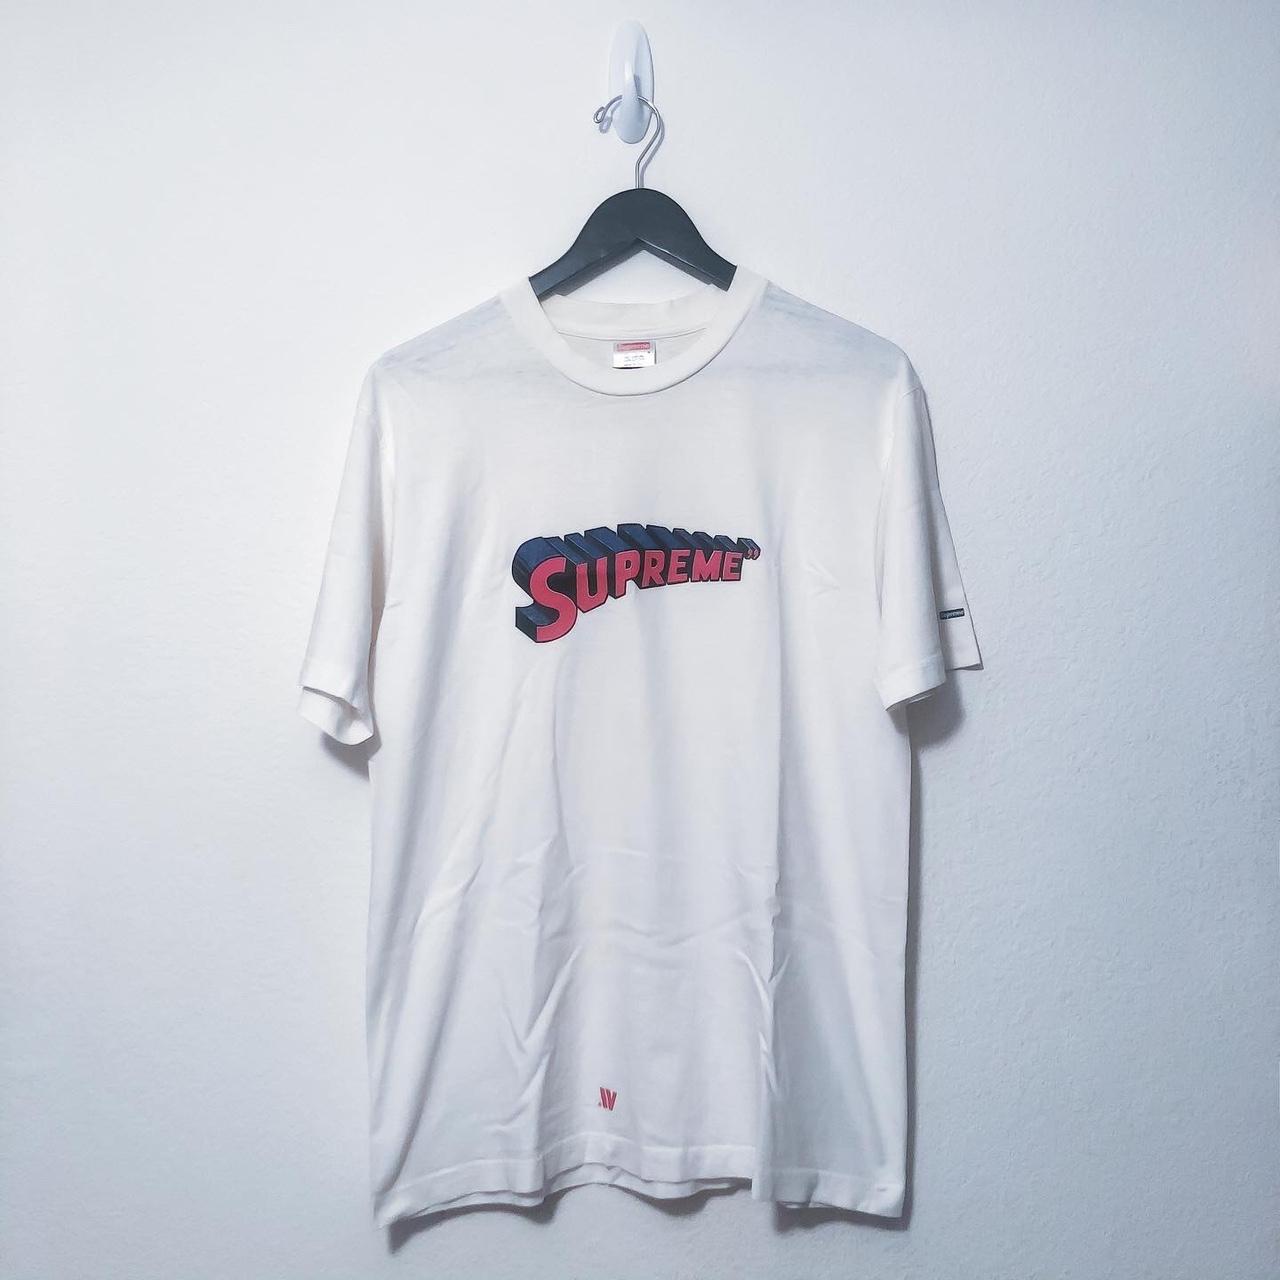 1998 Supreme x WTAPS “Superman” logo tee, • used